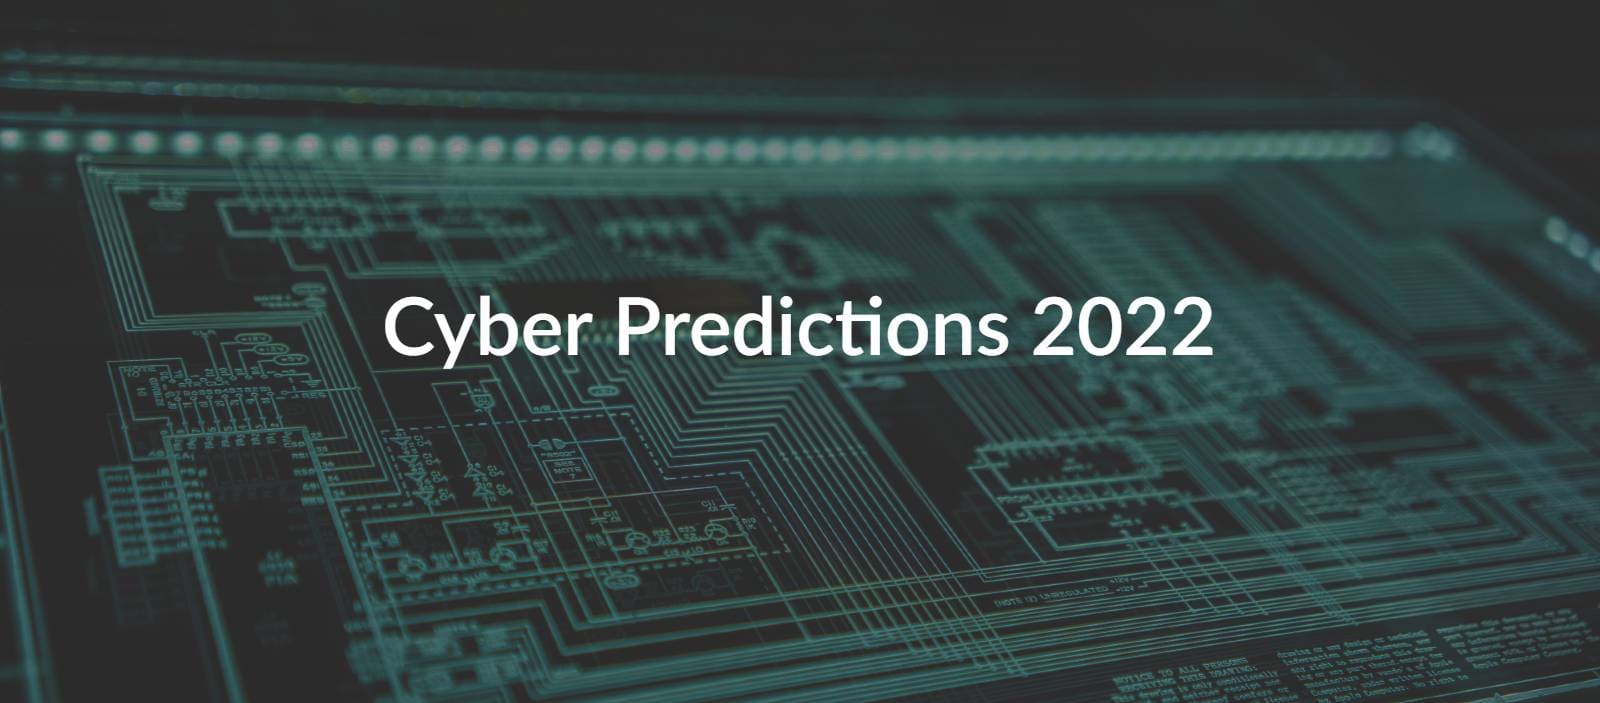 Cyber predictions 2022